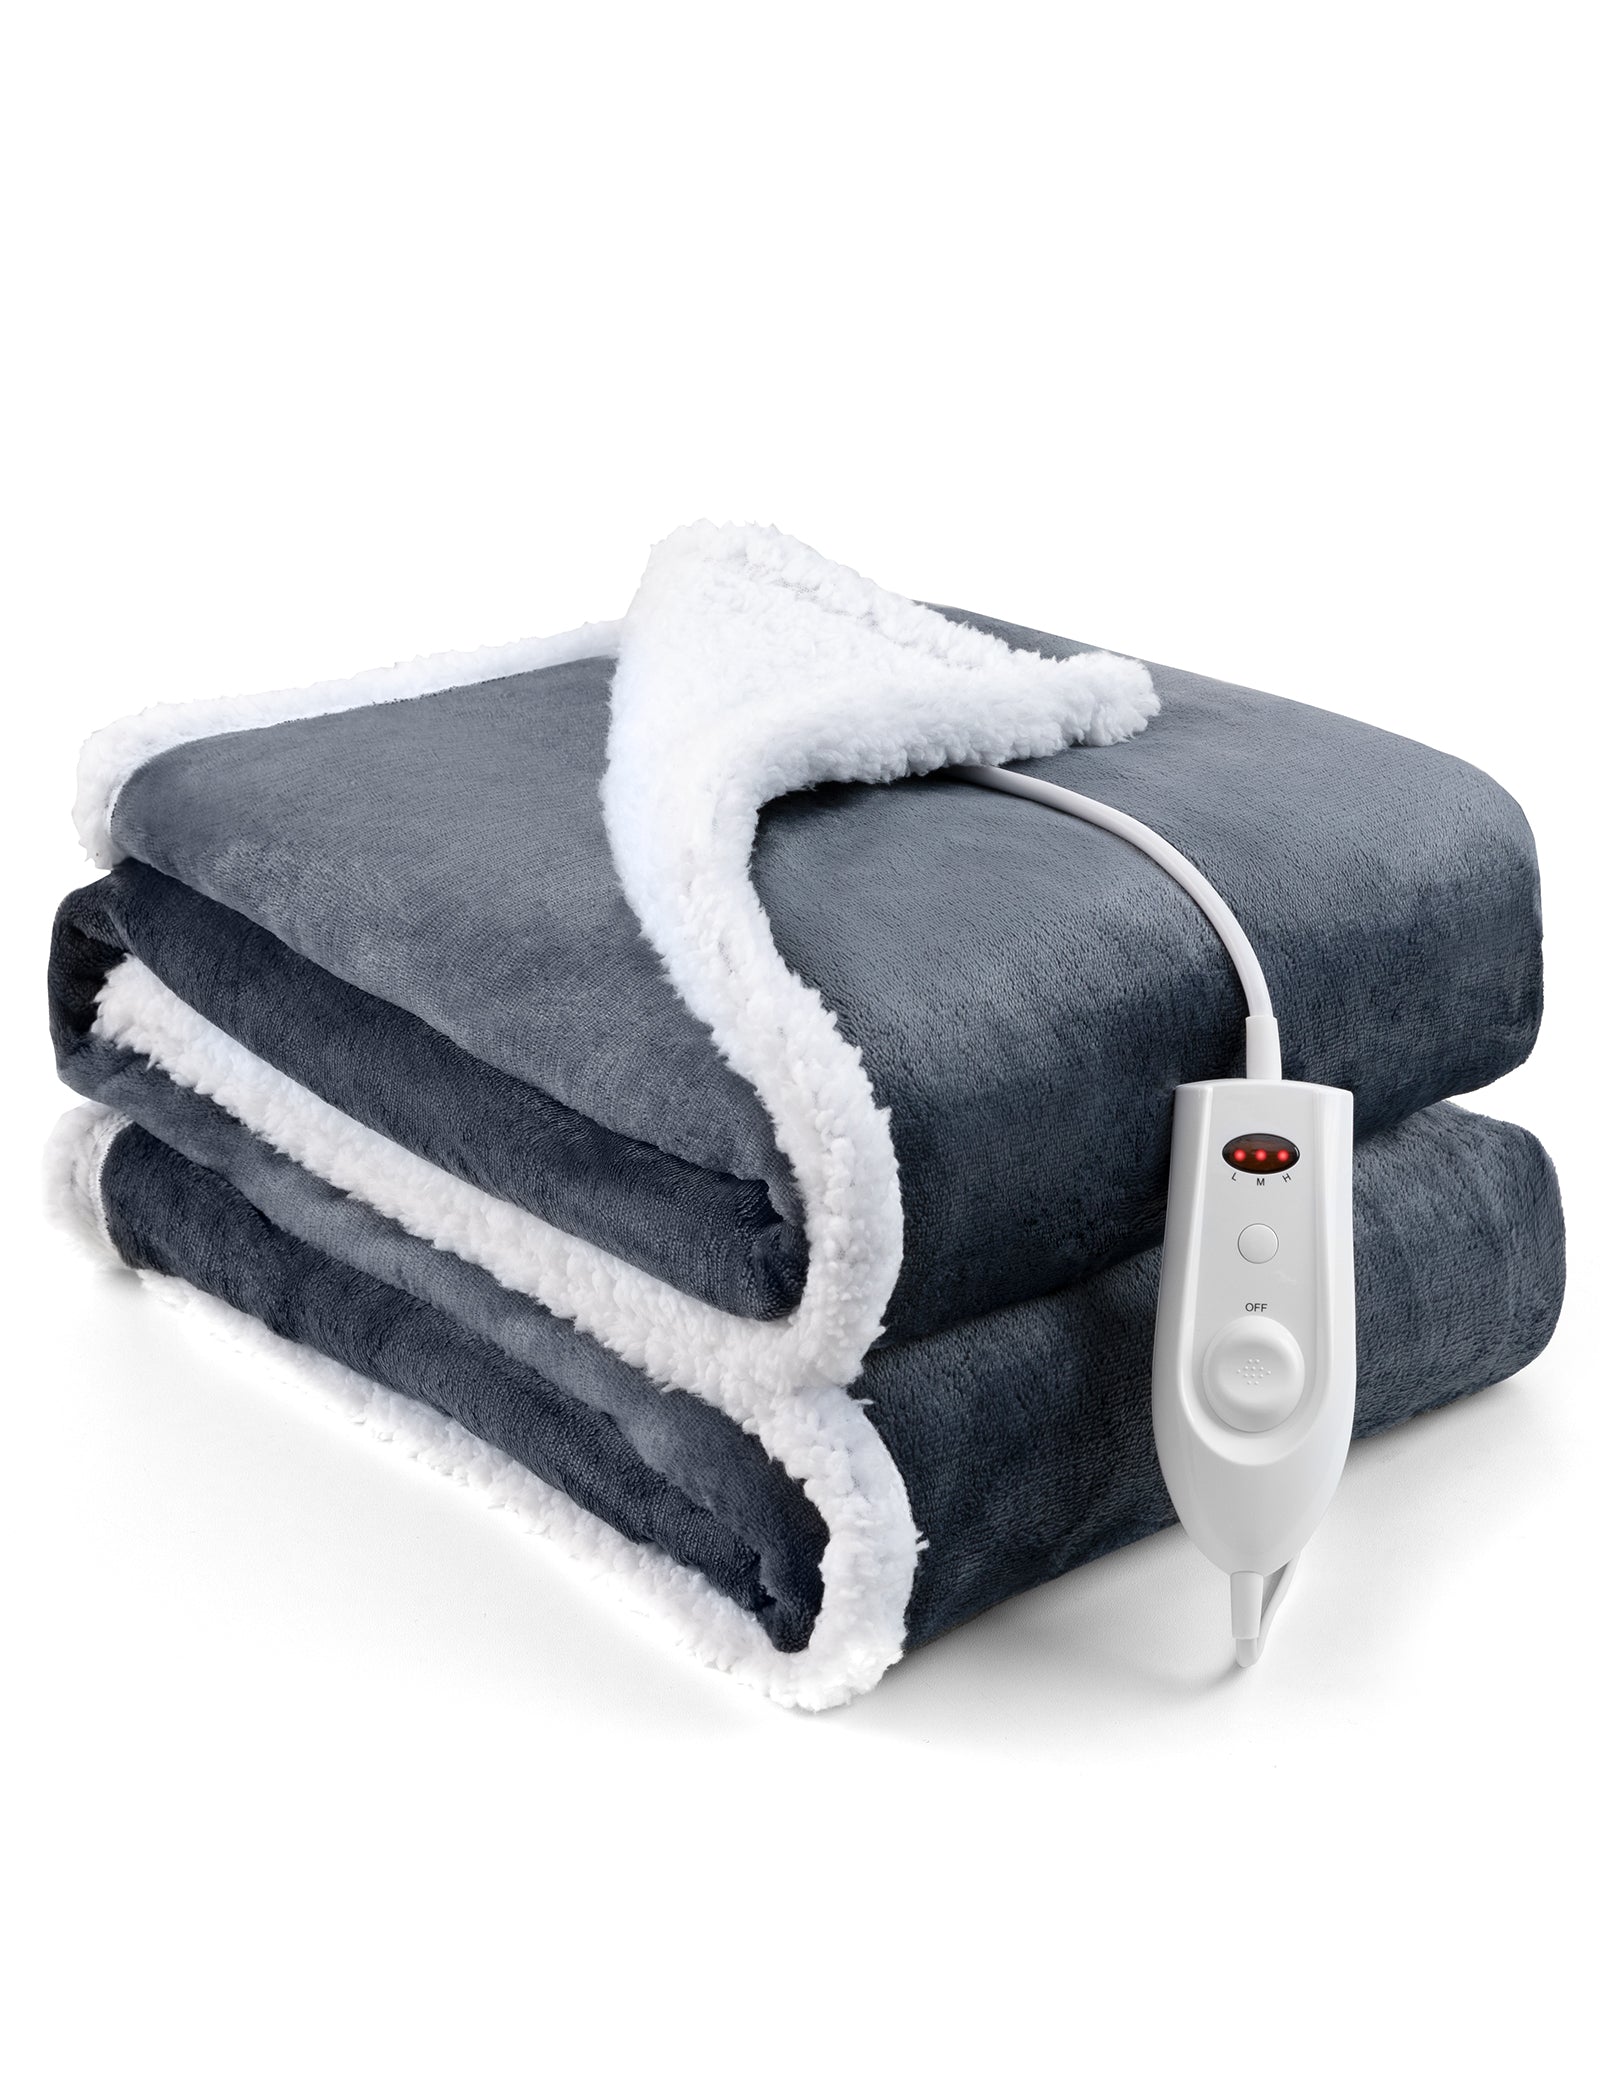 Electric Heated Blanket Machine Washable 50x60 Size Soft